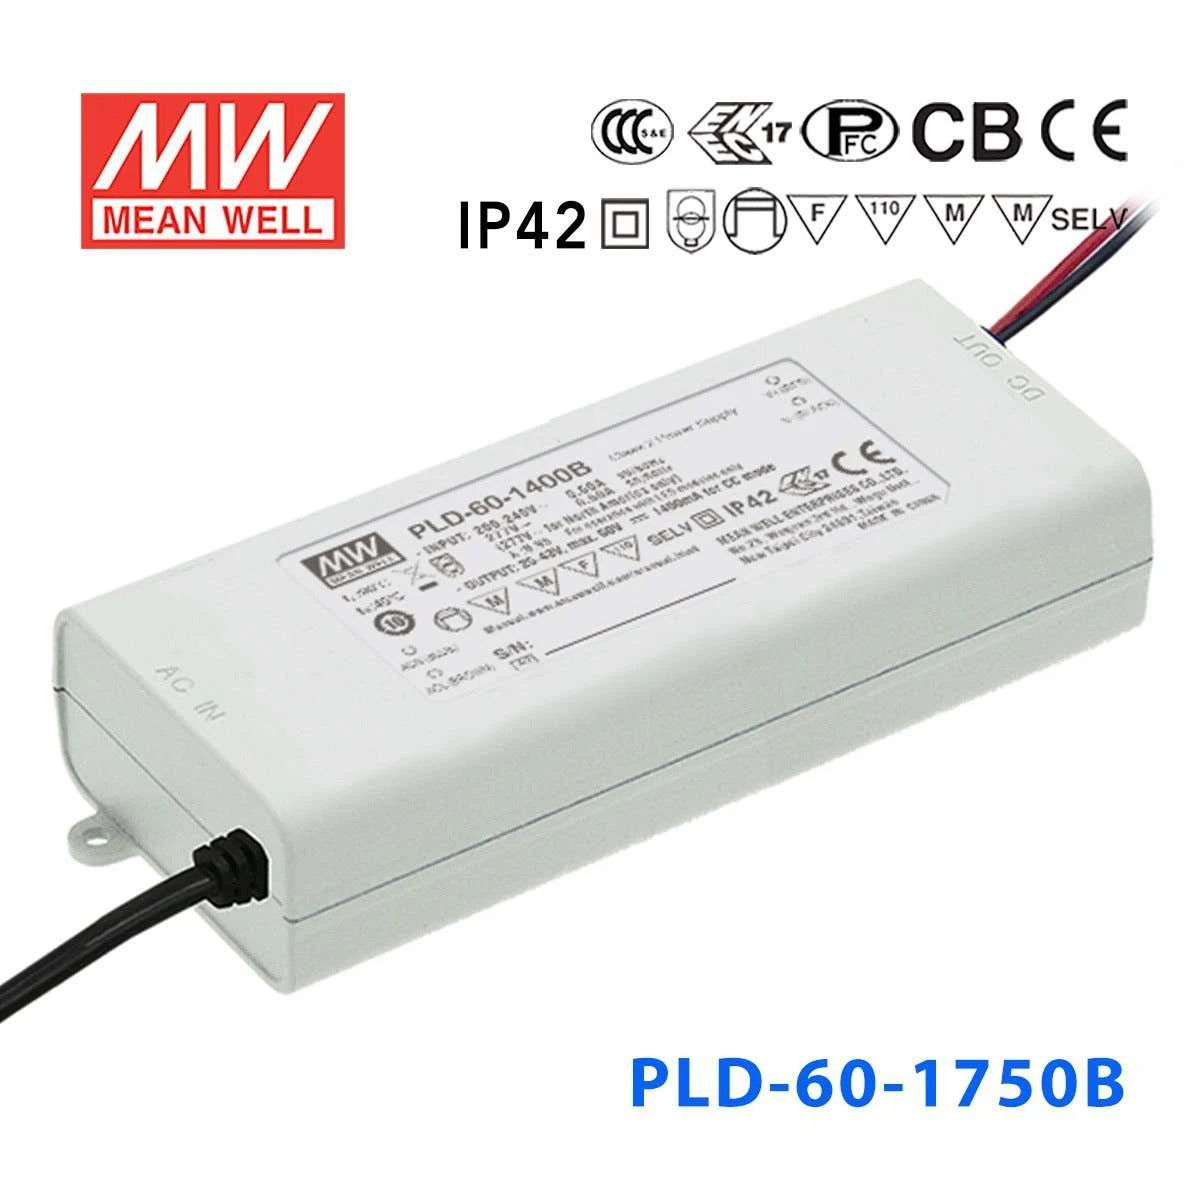 Mean Well PLD-60-1750B Power Supply 60W 1750mA